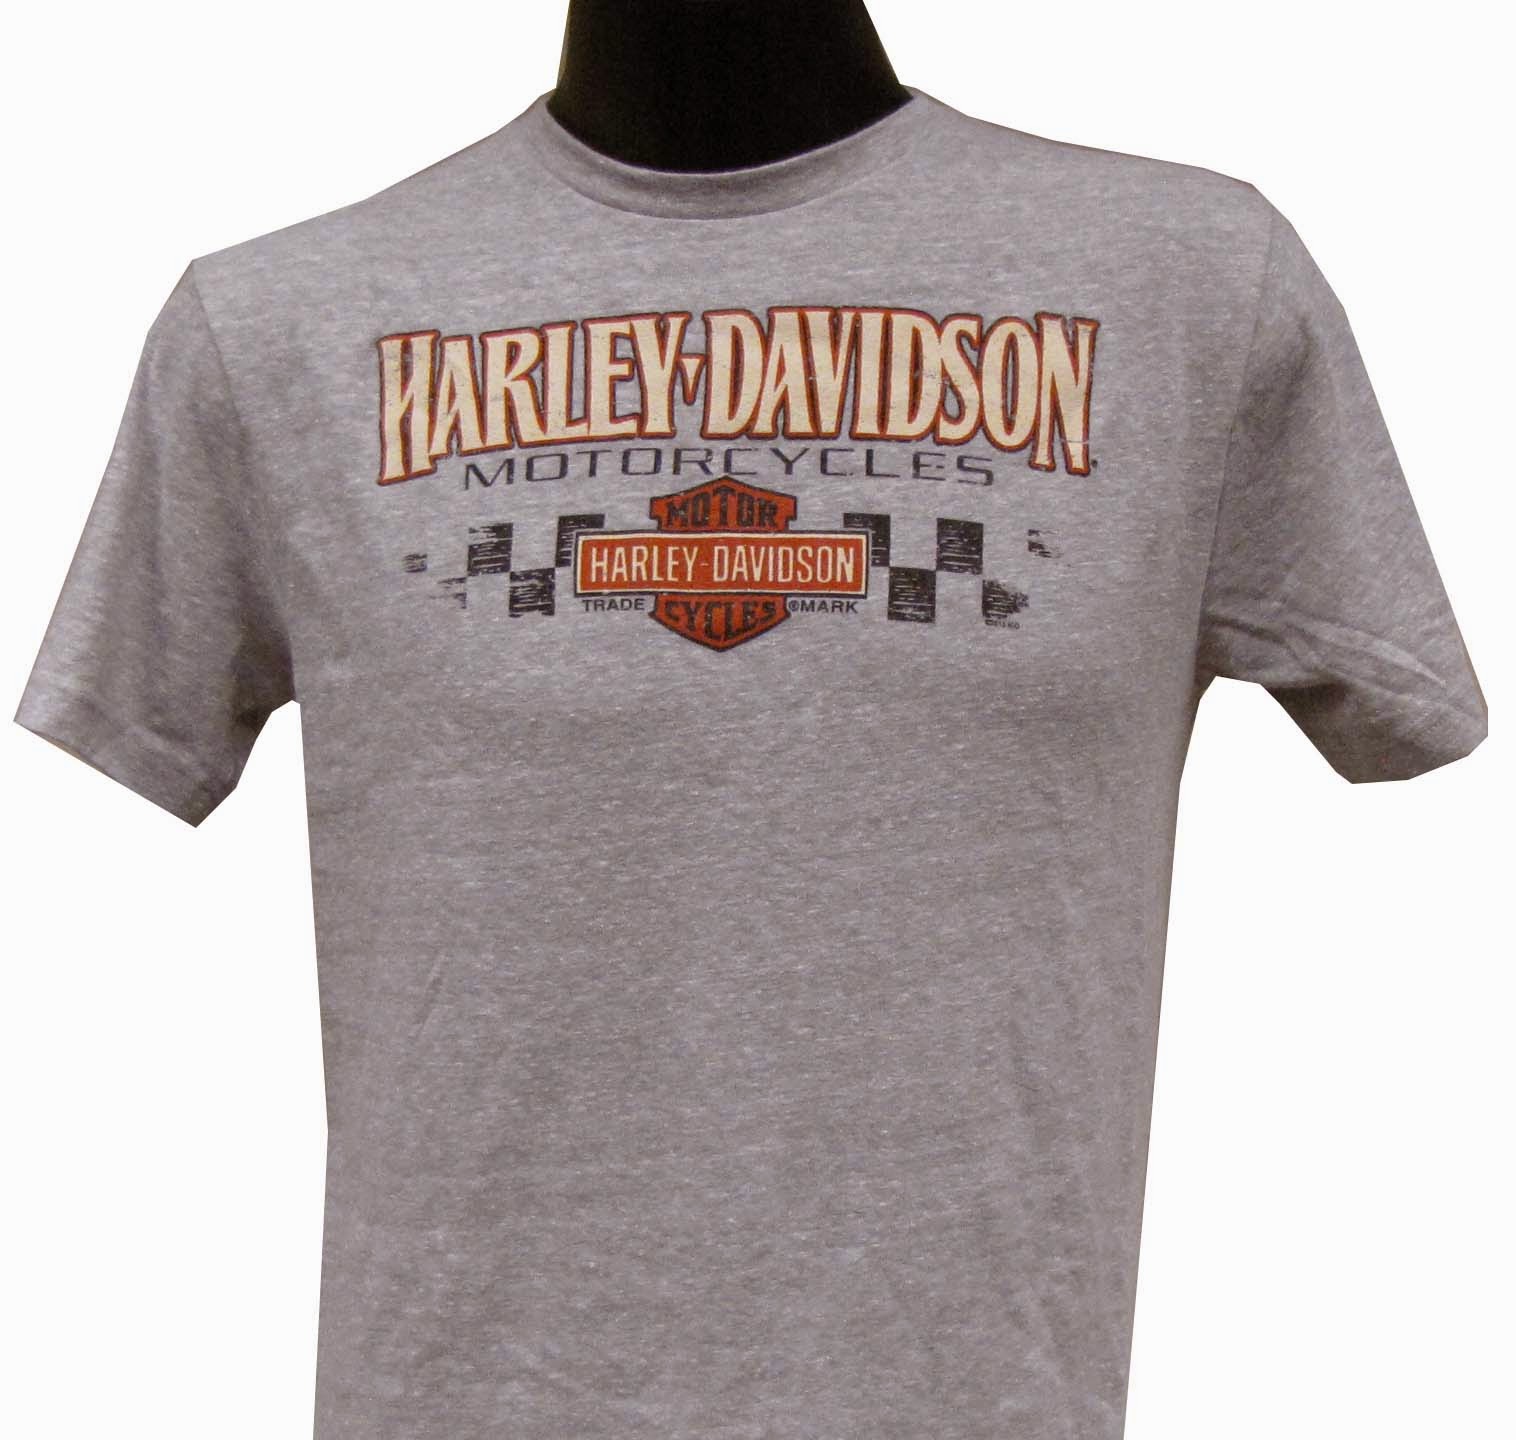 http://www.adventureharley.com/harley-davidson-t-shirt-intense-speed-gnarly-heather-gray